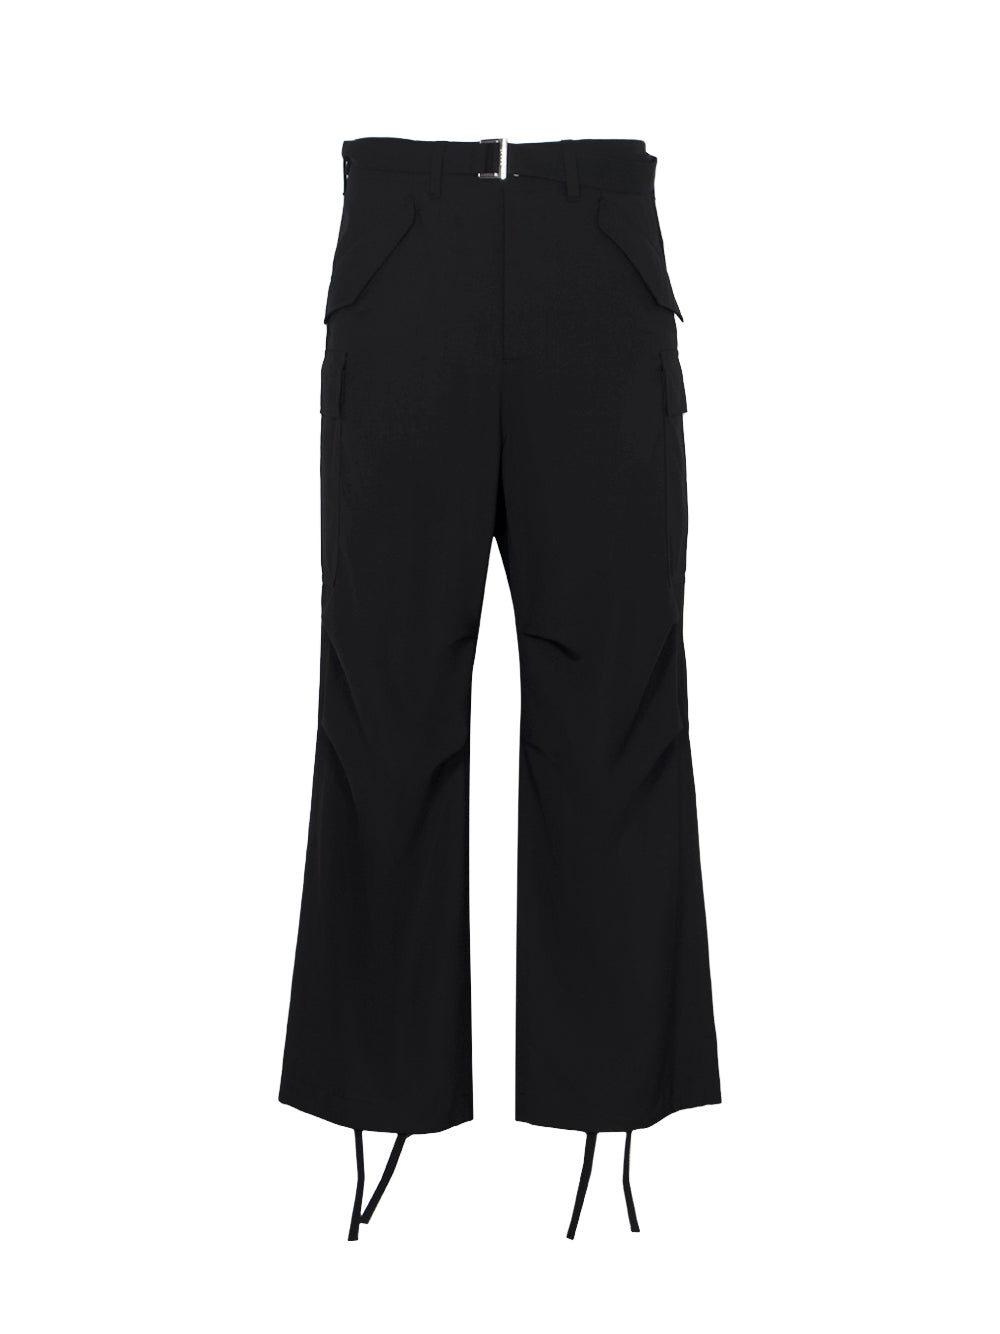 Cinch Cargo Pants (Black)